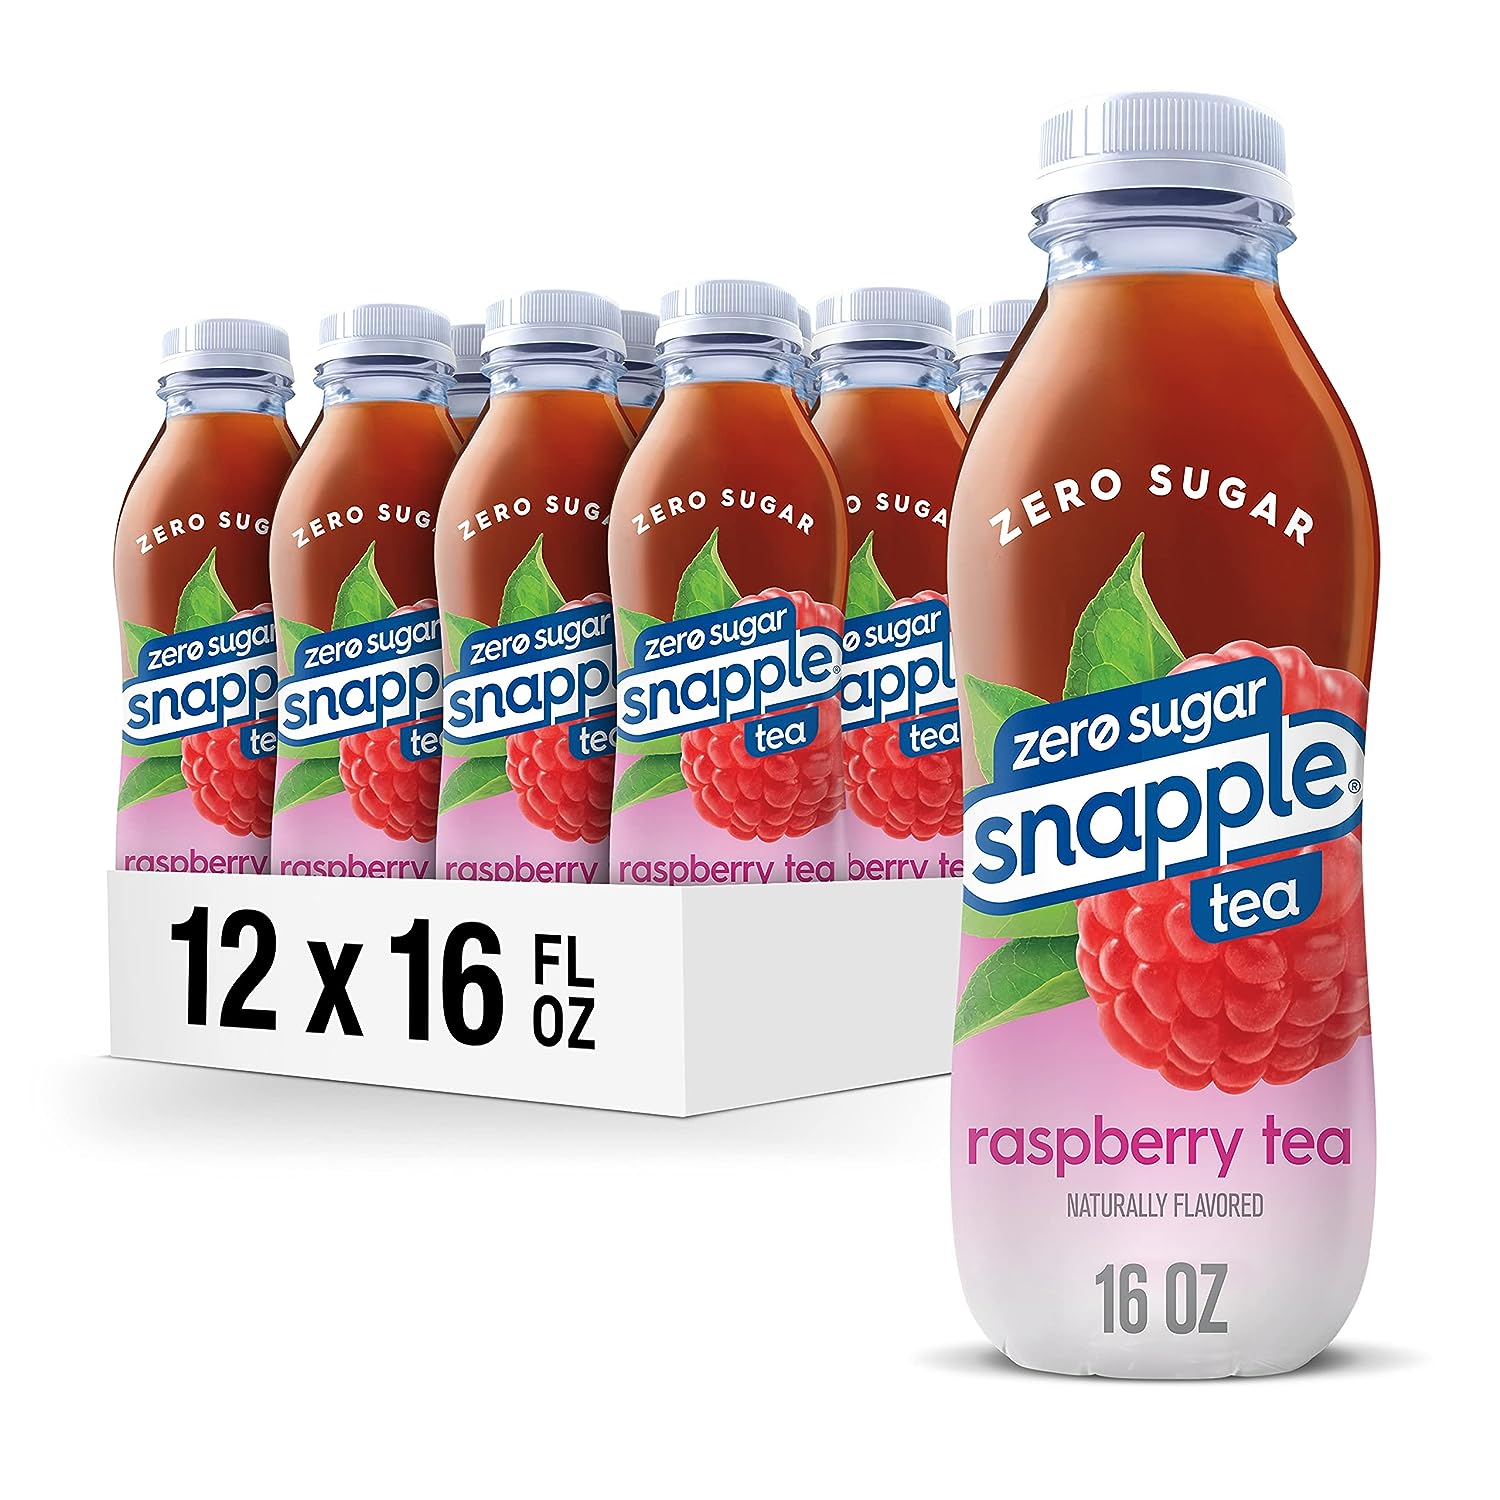 12-Pack 16-Oz Snapple Zero Sugar Raspberry Tea Plastic Bottles $9.45 w/ S&S + Free Shipping w/ Prime or on orders over $35